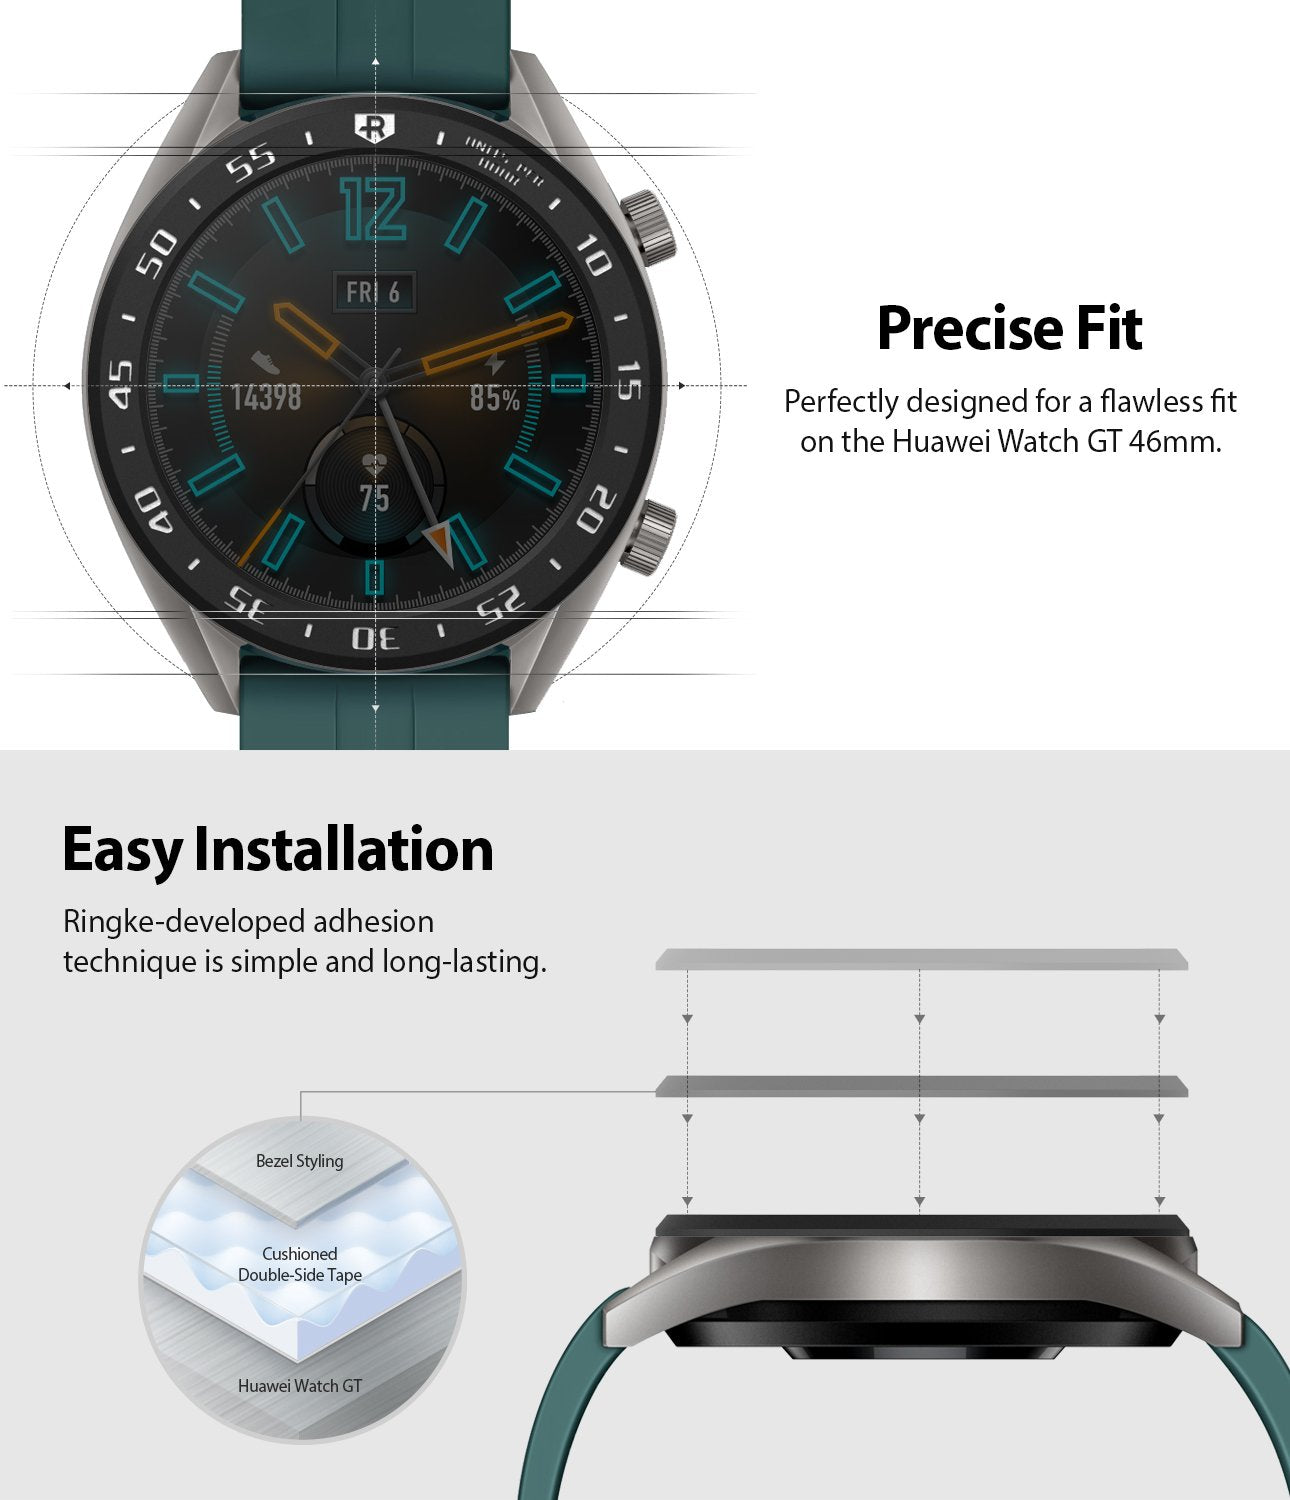 Ringke Bezel Styling for Huawei Watch GT 46mm 46-03 Black, perfect fit